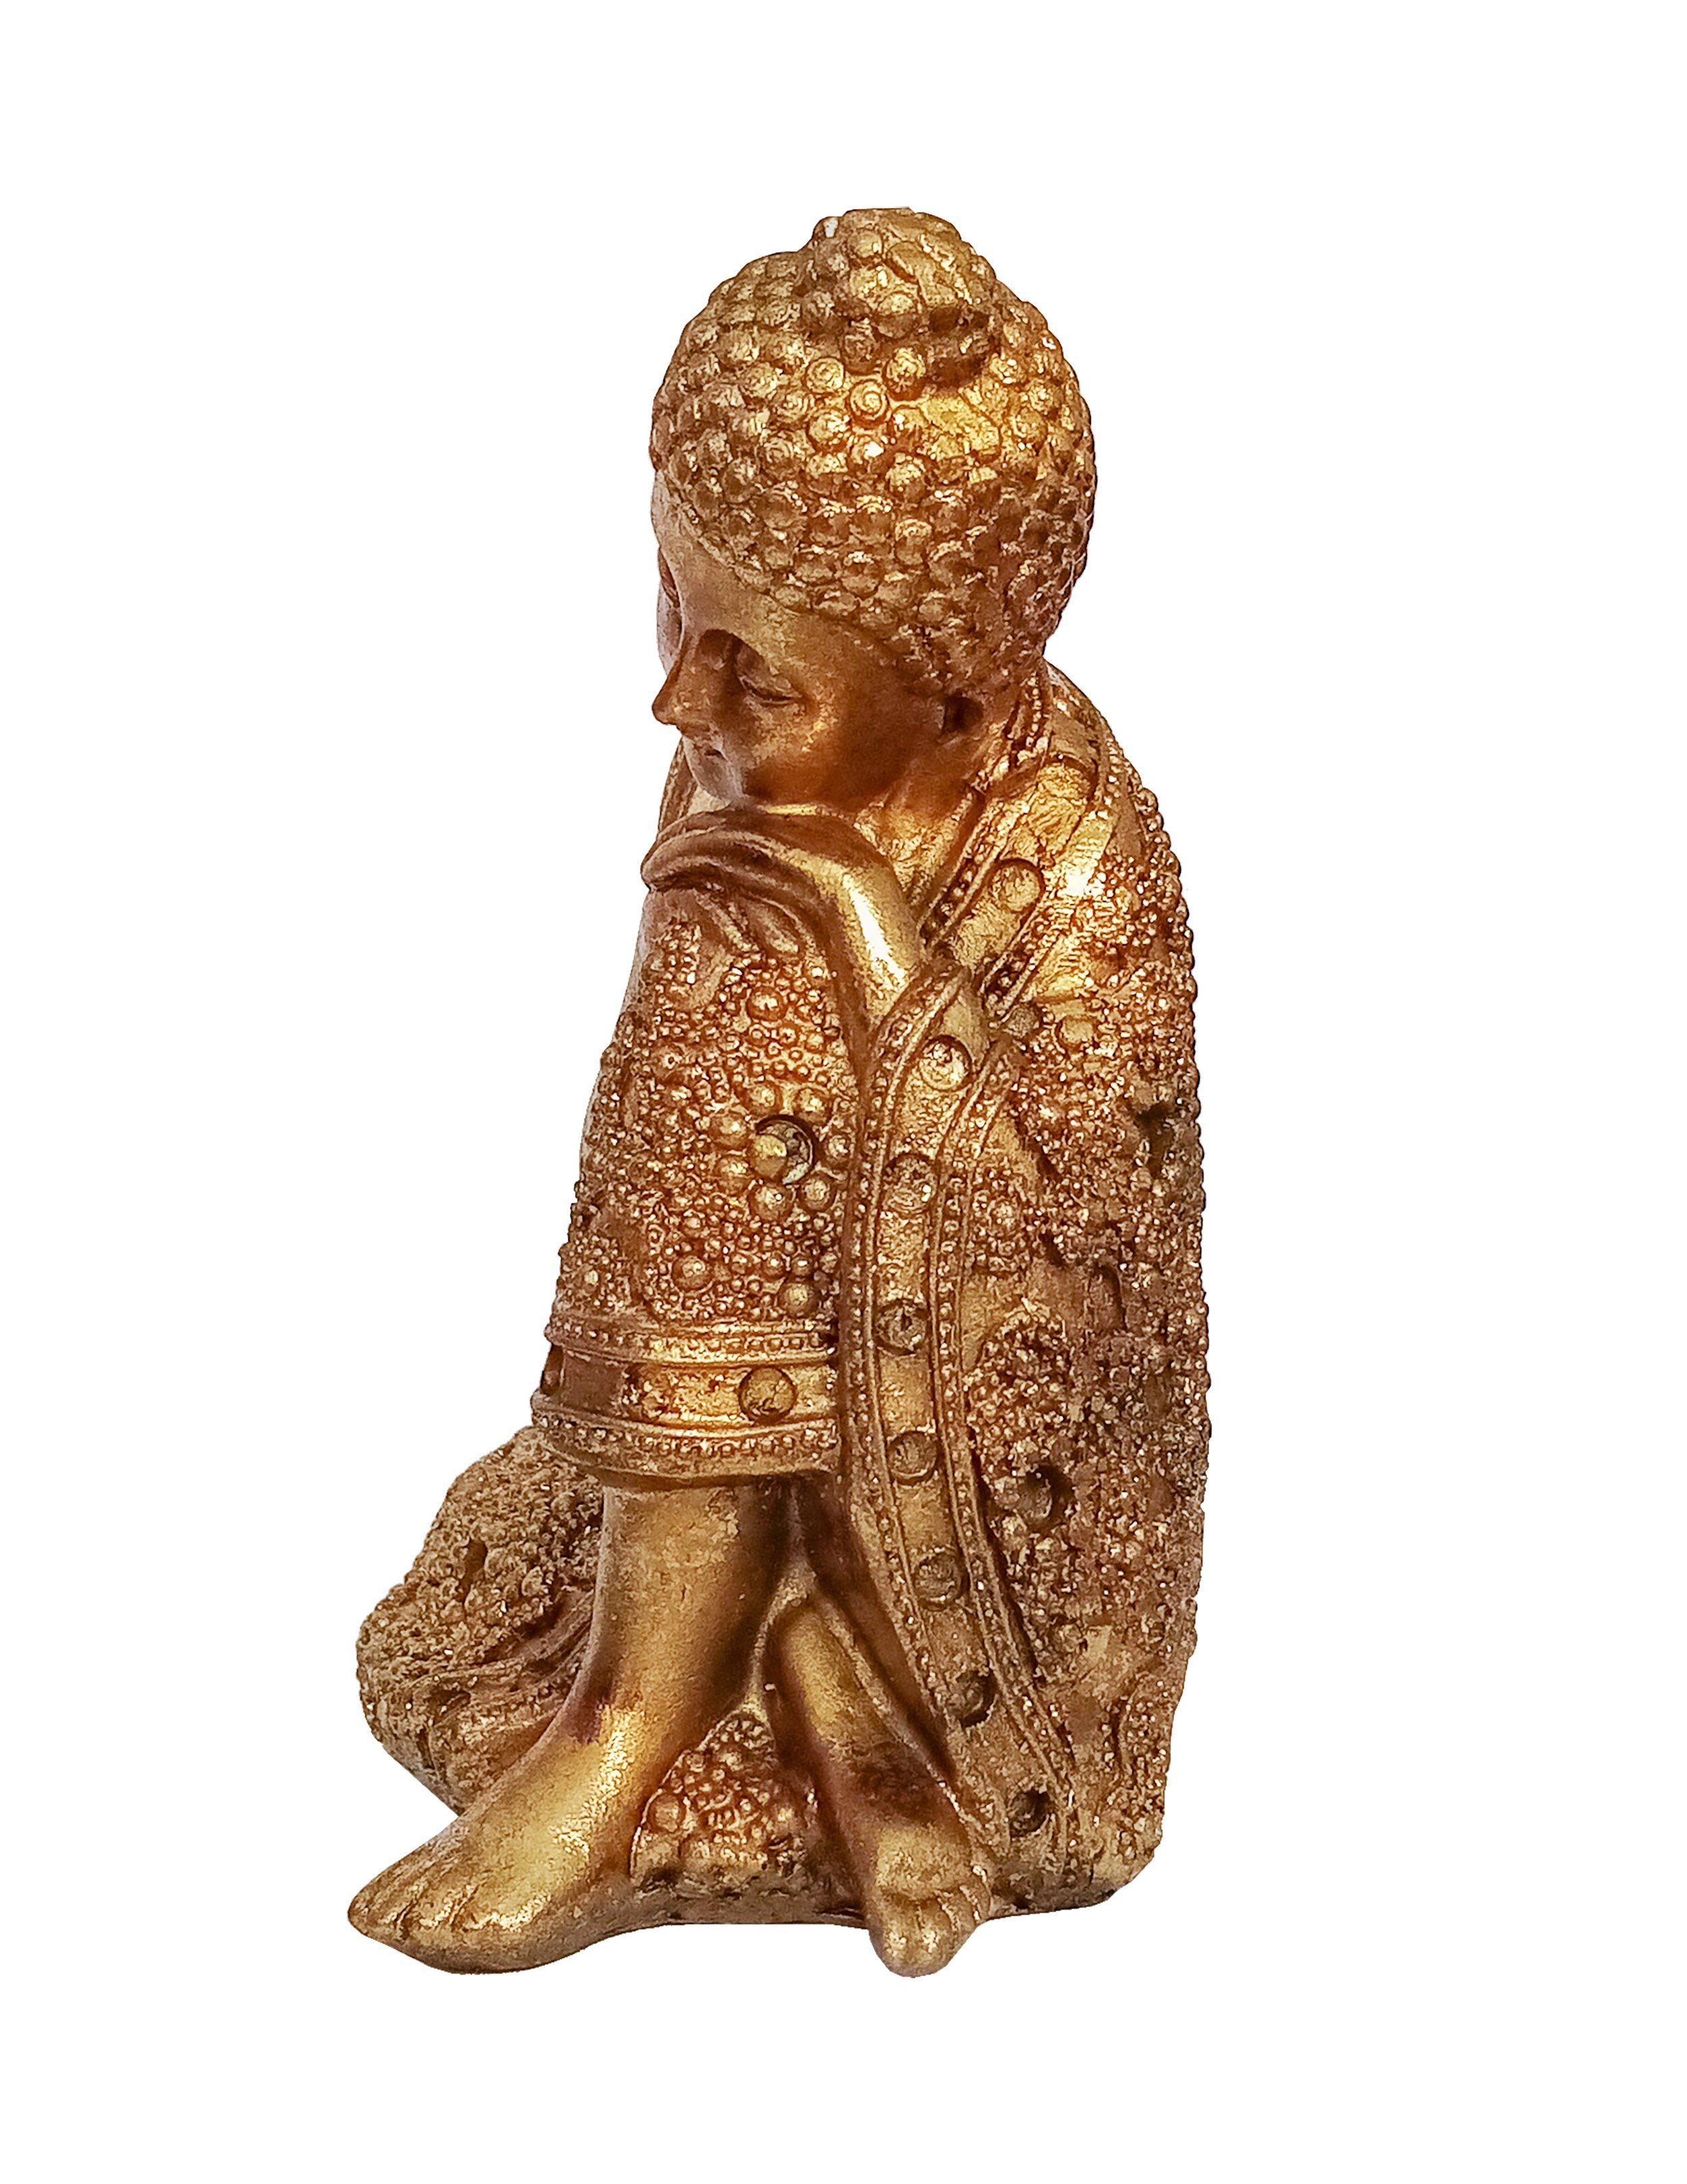 Giftdecor Buddhafigur Buddha Decoration Gold 12x16cm linkes Statue aus Knie Polyresin Auf Garten 91 Figur Knie), (auf Shui Budda Thai Feng Deko